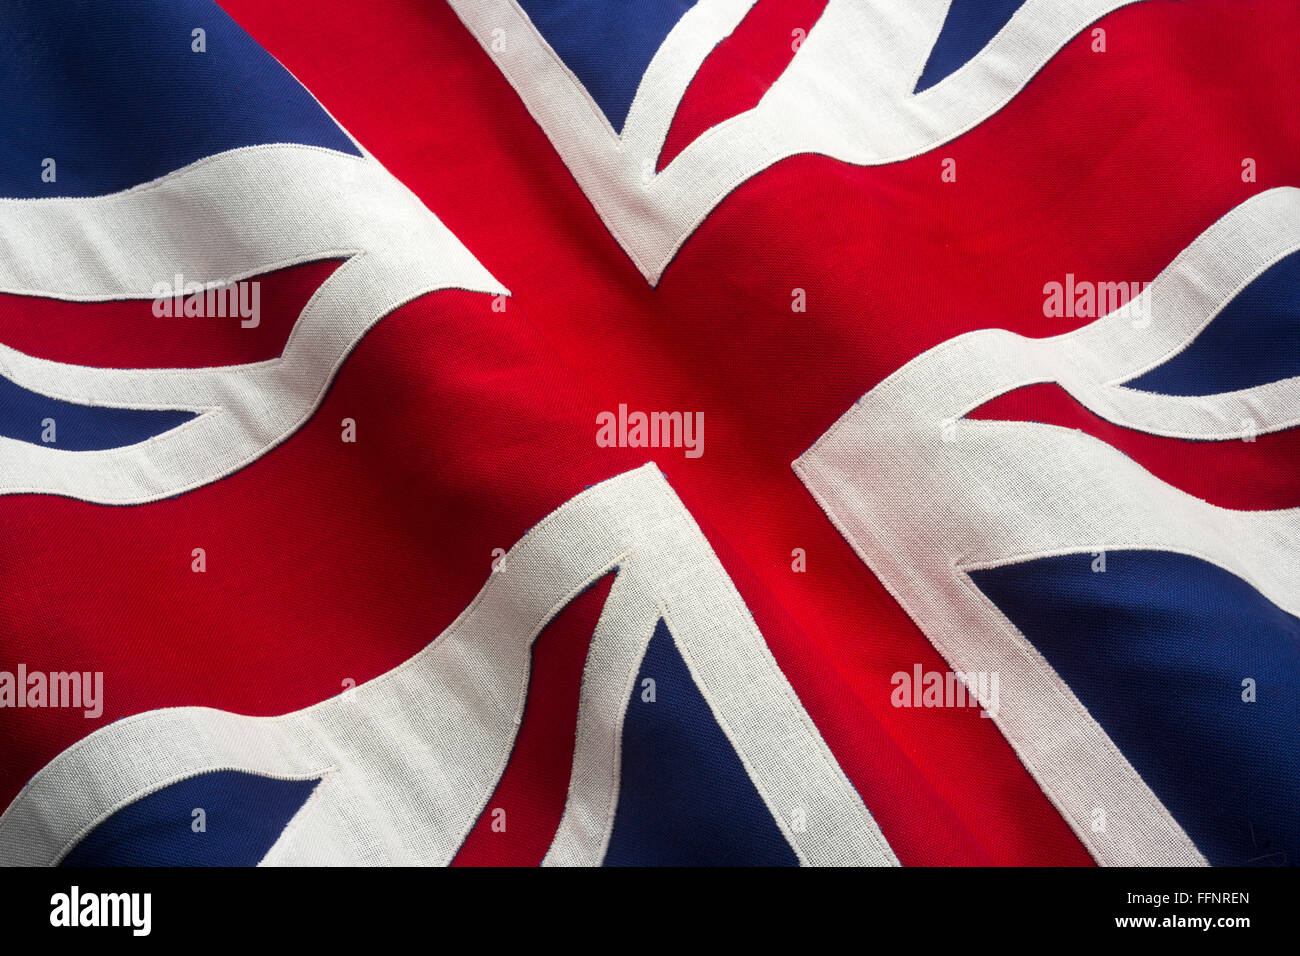 BRITISH UNION JACK FLAG MADE OF STITCHED COTTON BUNTING Stock Photo